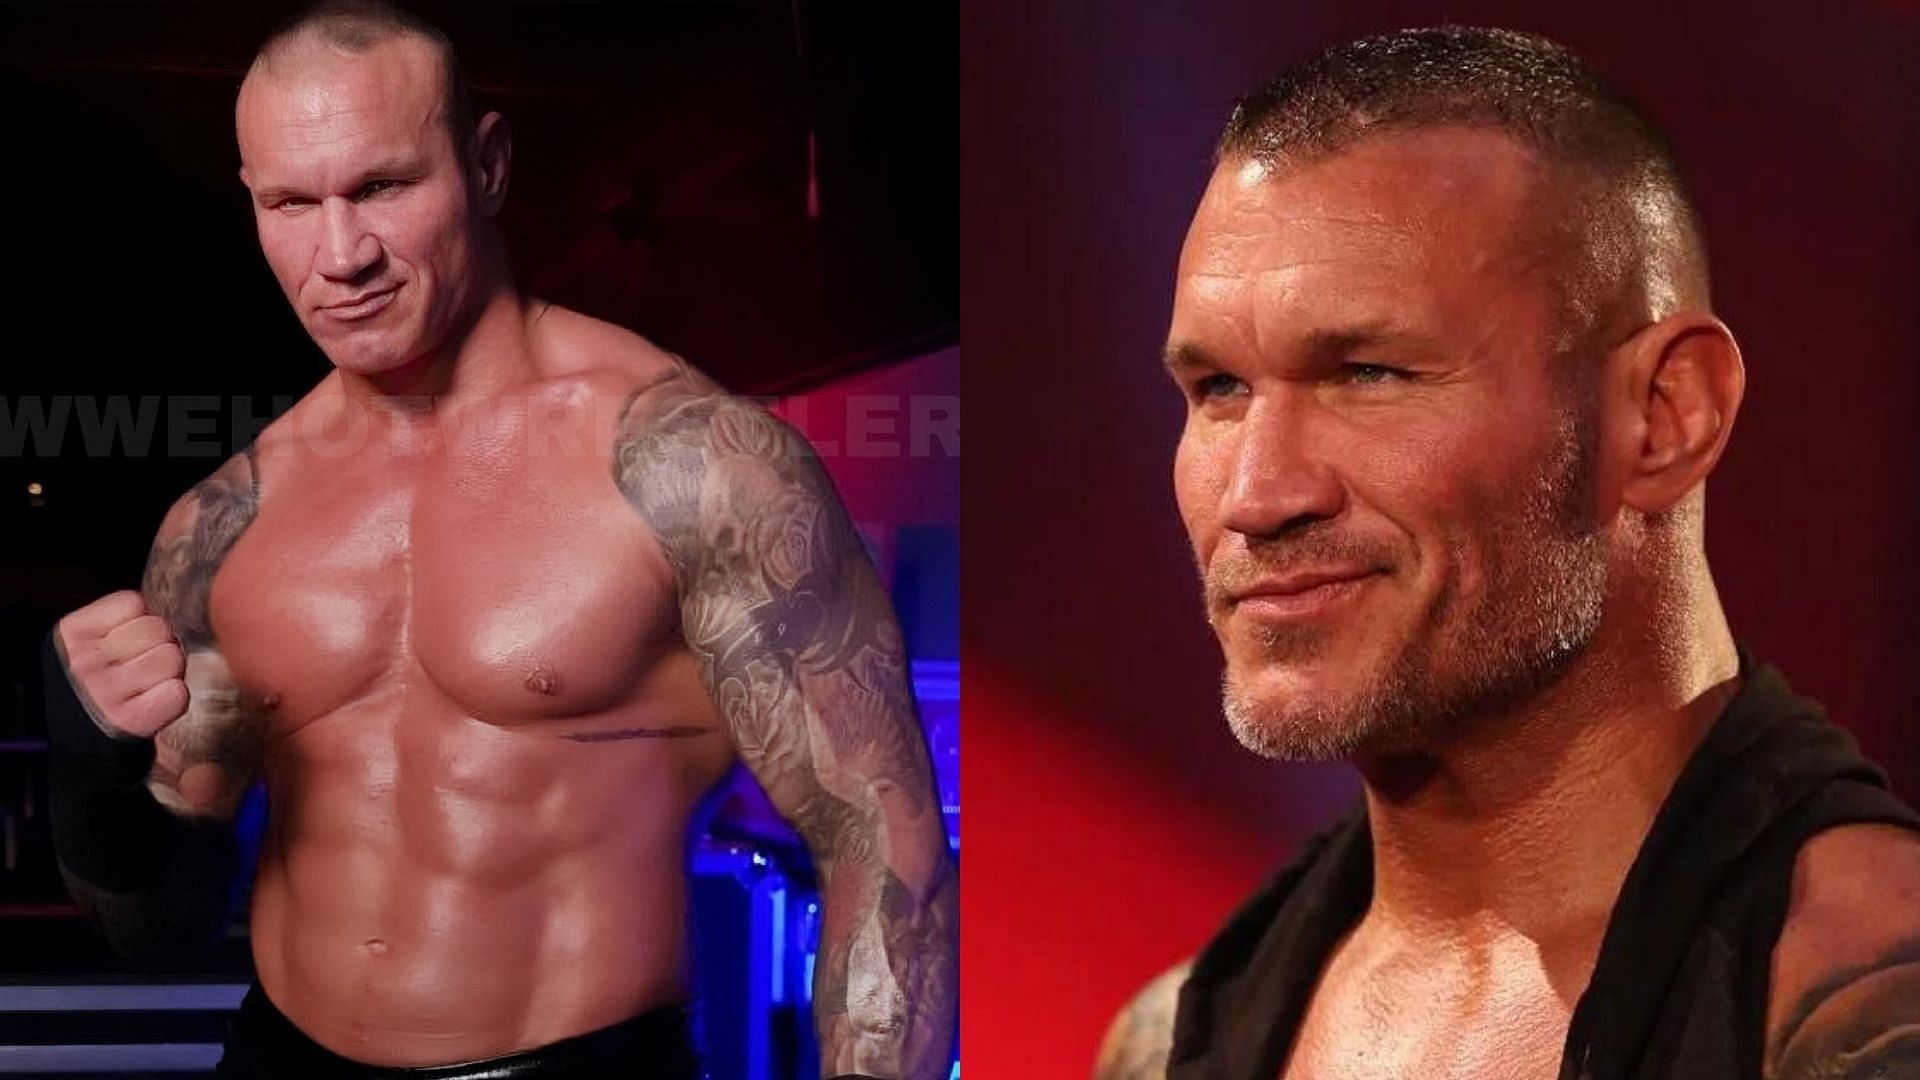 Orton made his return last night at Survivor Series.